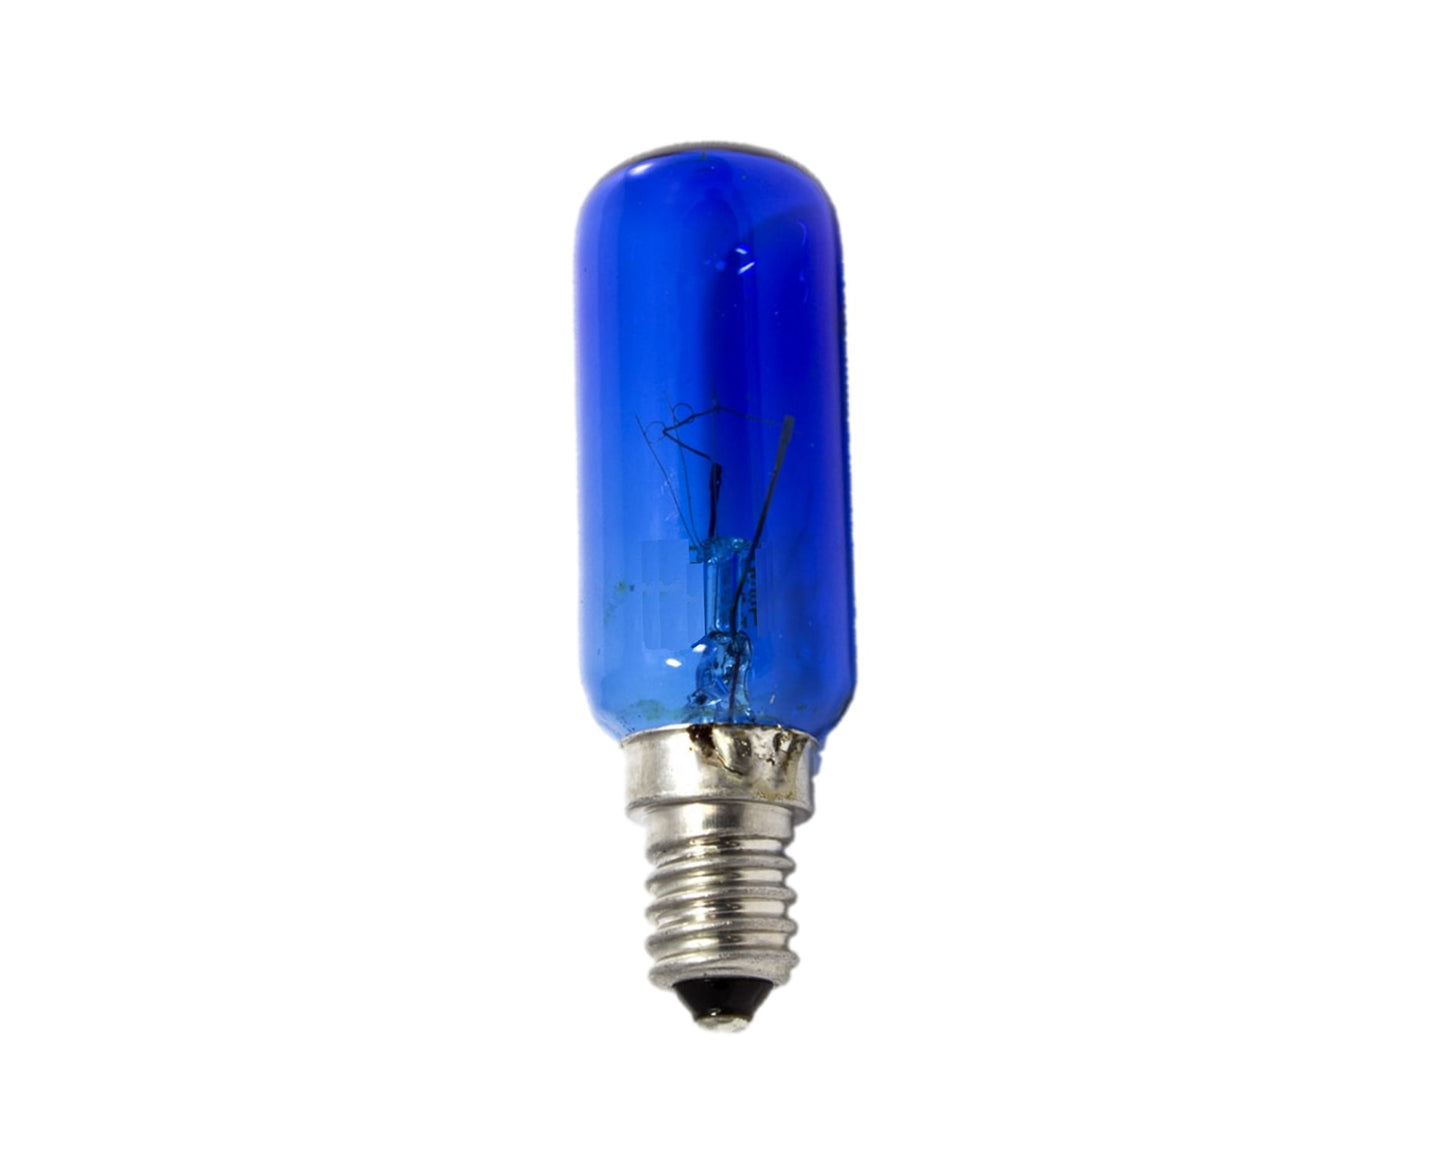 Refrigerator Fridge Lamp Bulb for Bosch Fridge Freezer 25W E14 SES Blue - 612235, 00612235, ES1220347